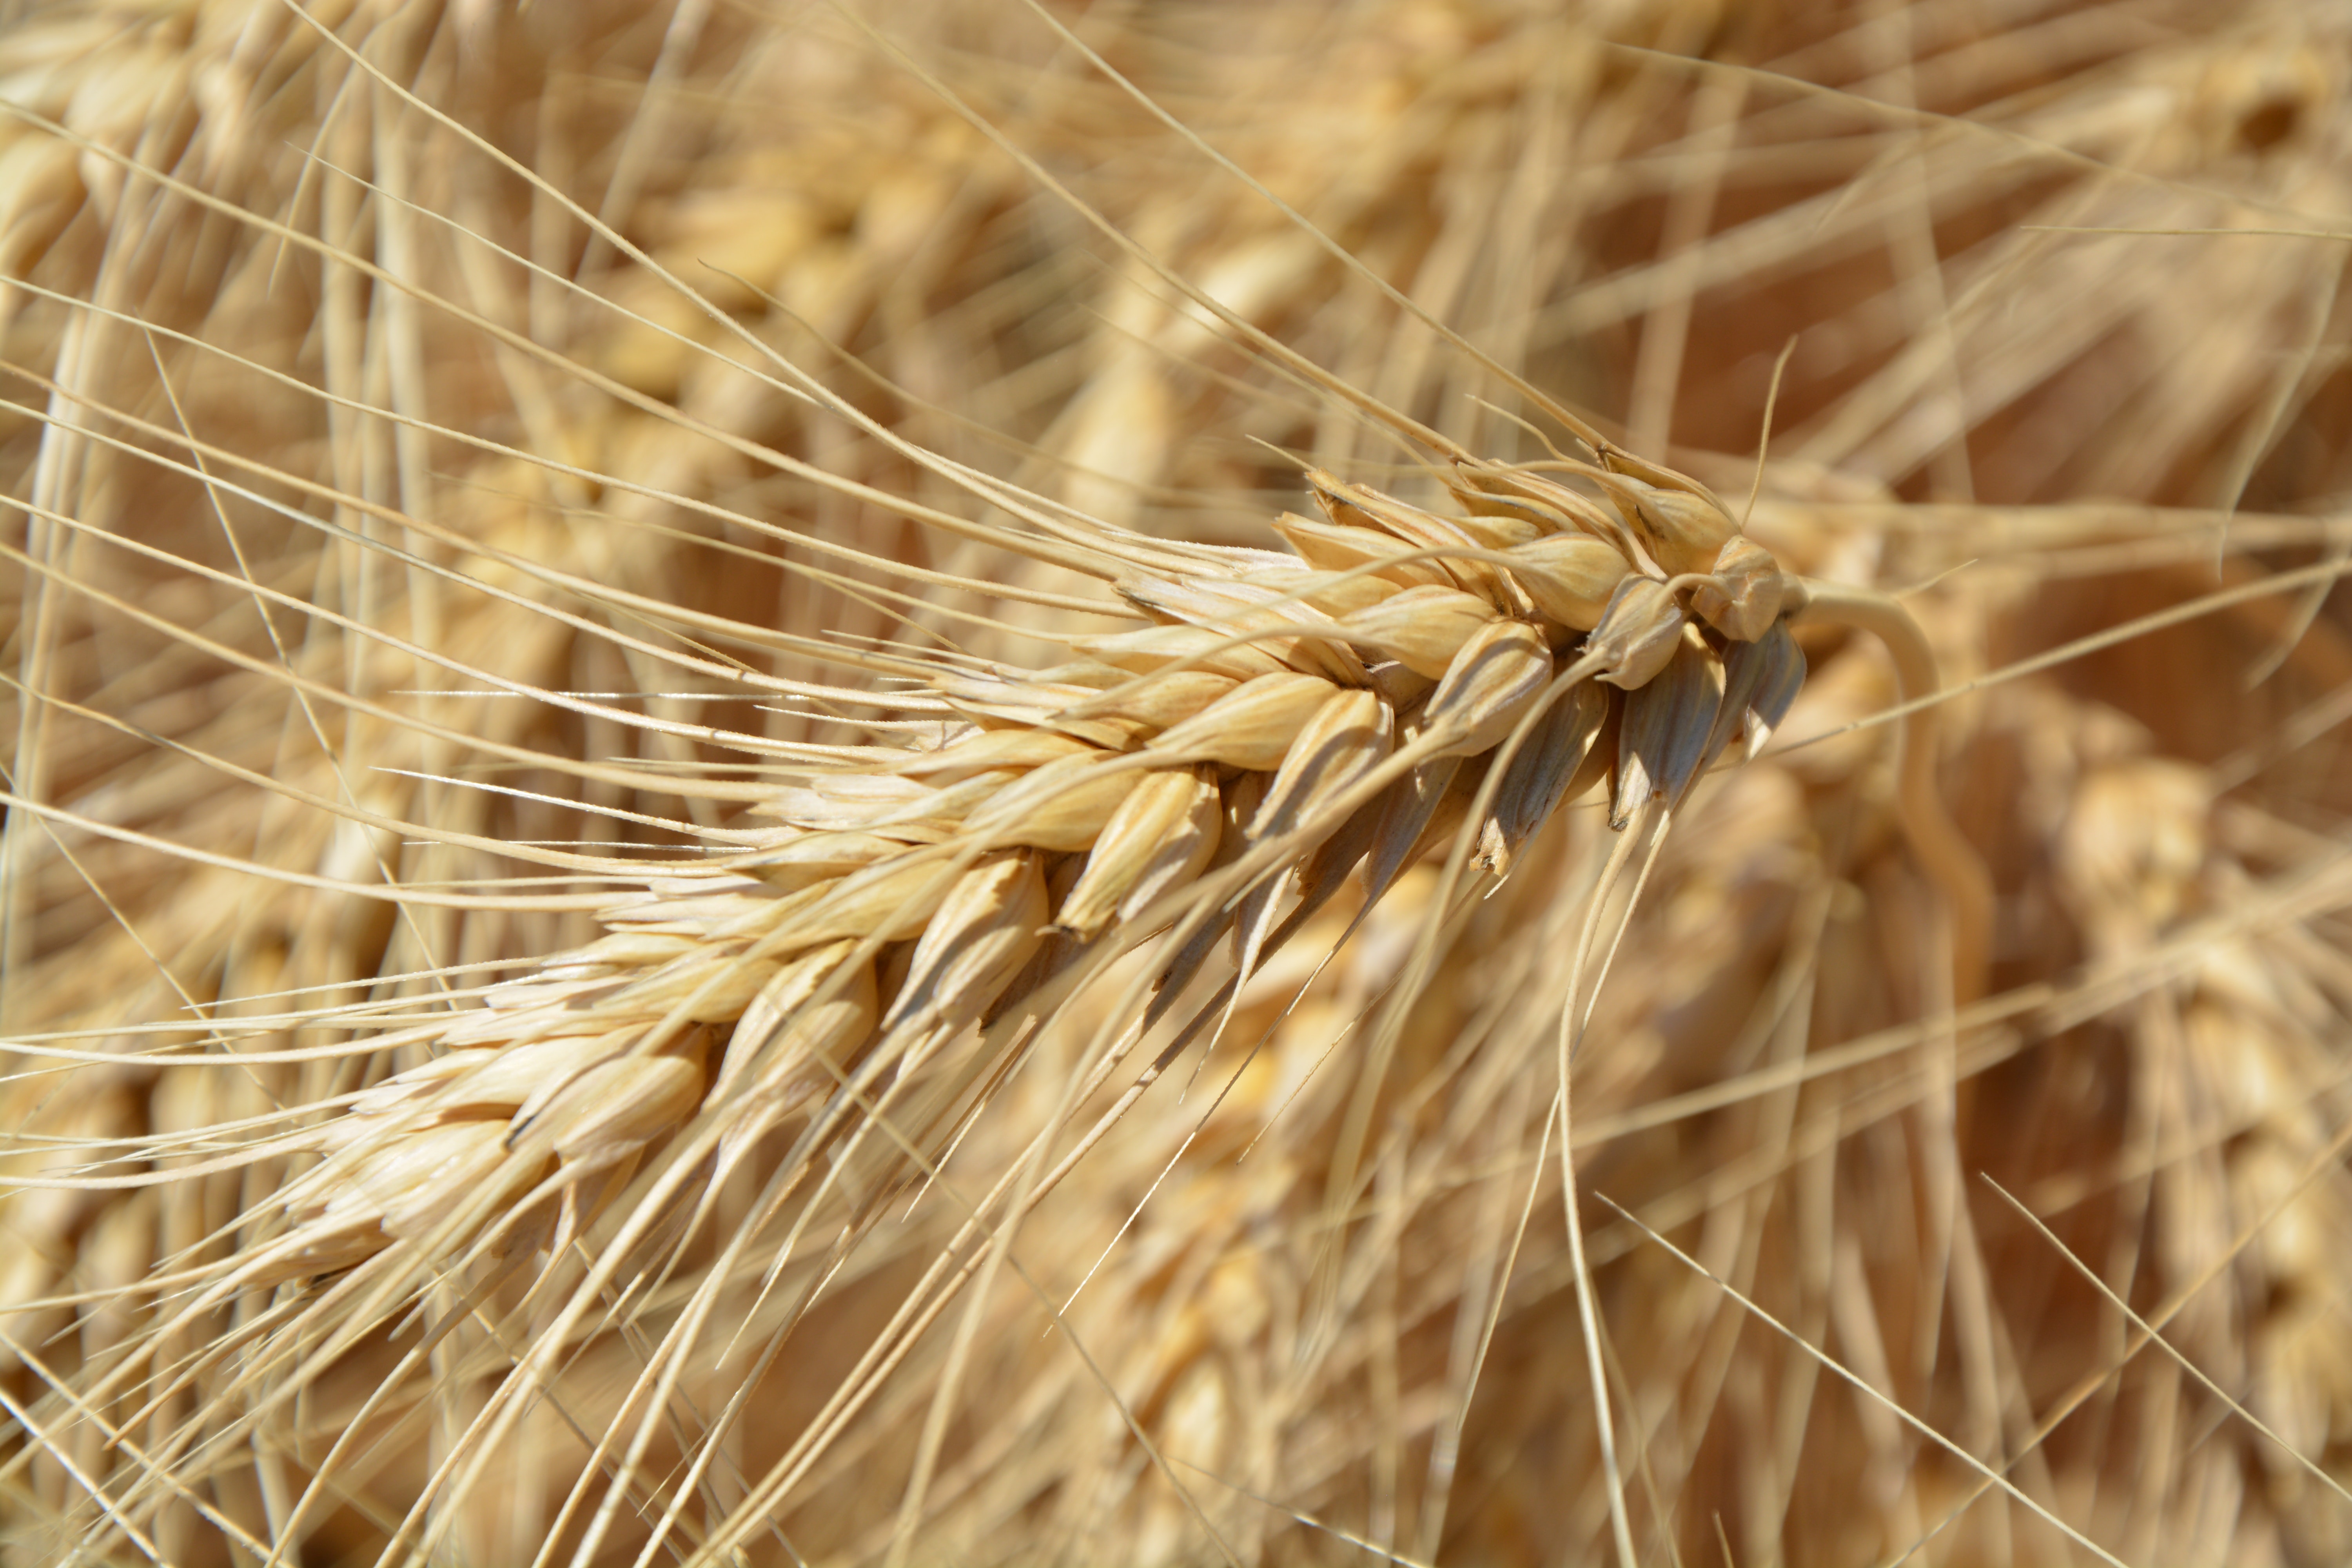 Wheat Grains Closeup Photography · Free Stock Photo